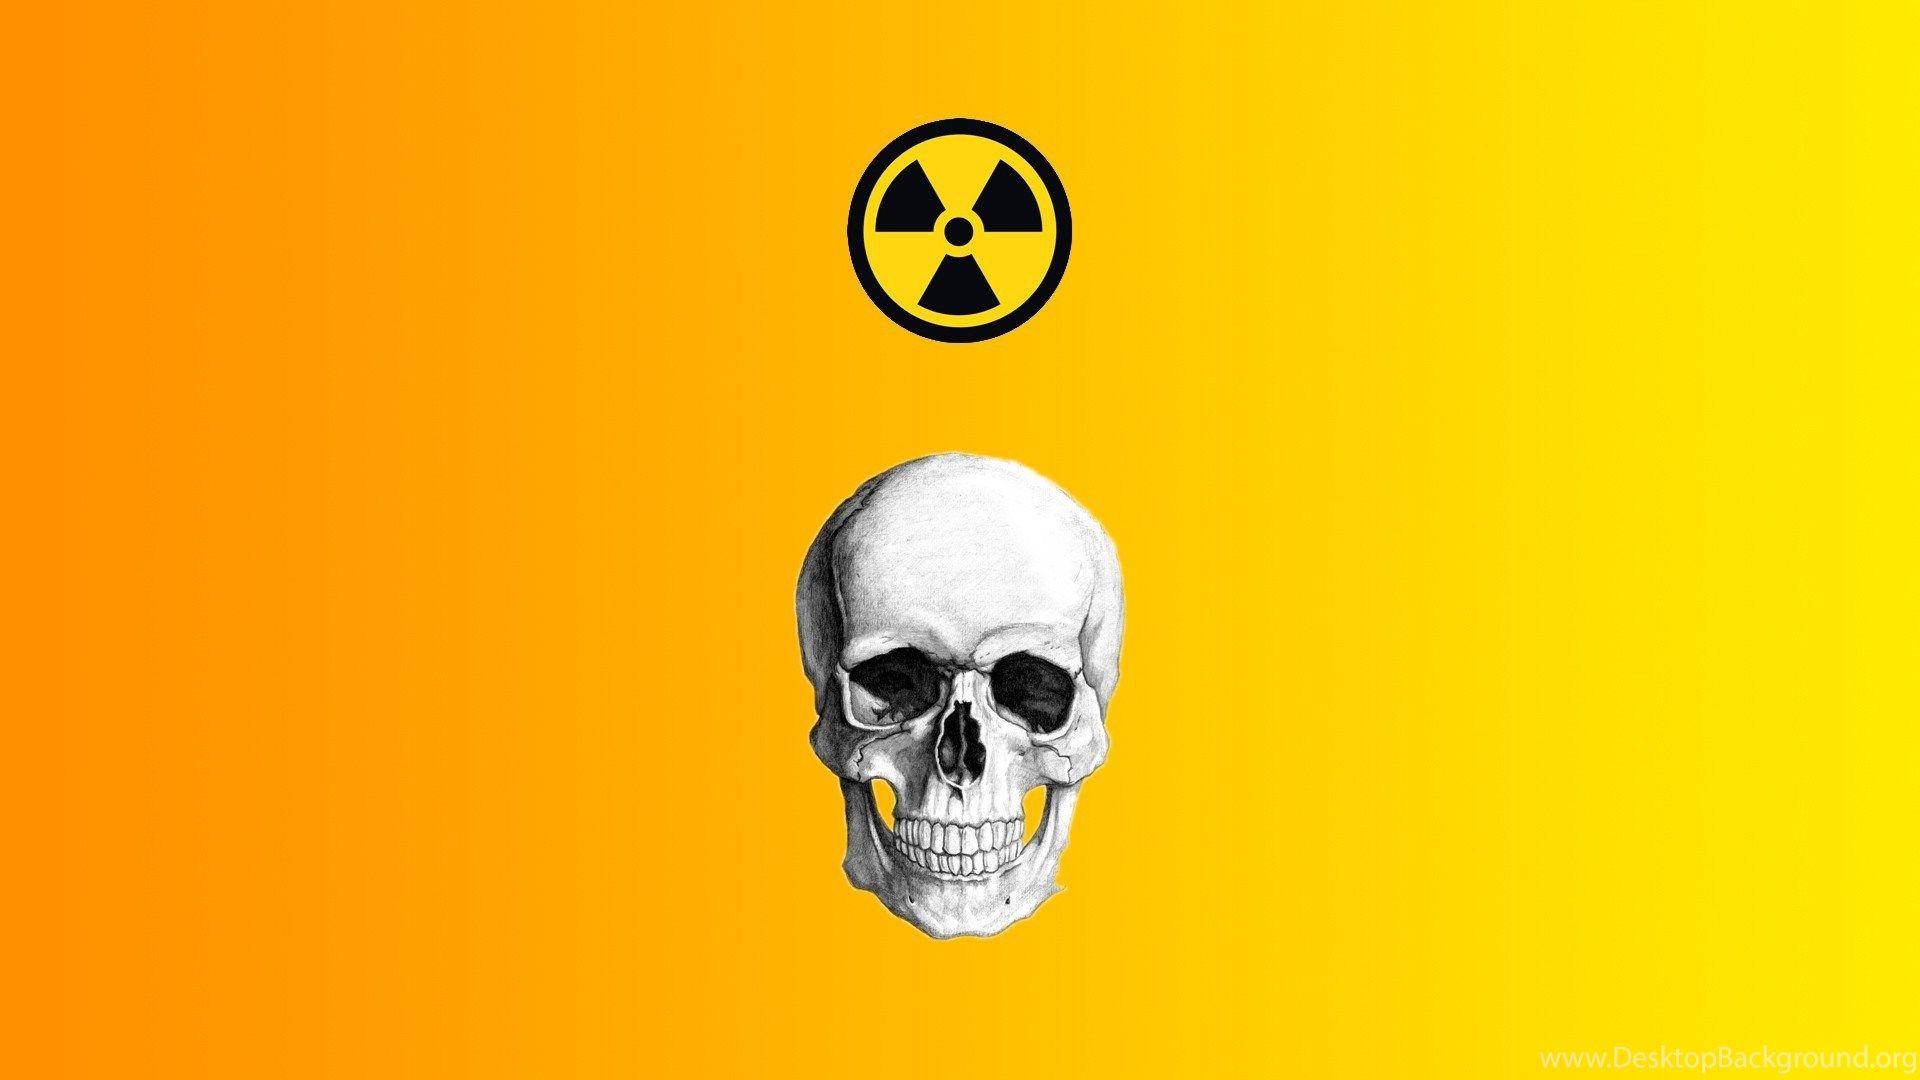 Skull And Radioactive Danger Sign Wallpaper And Image. Desktop